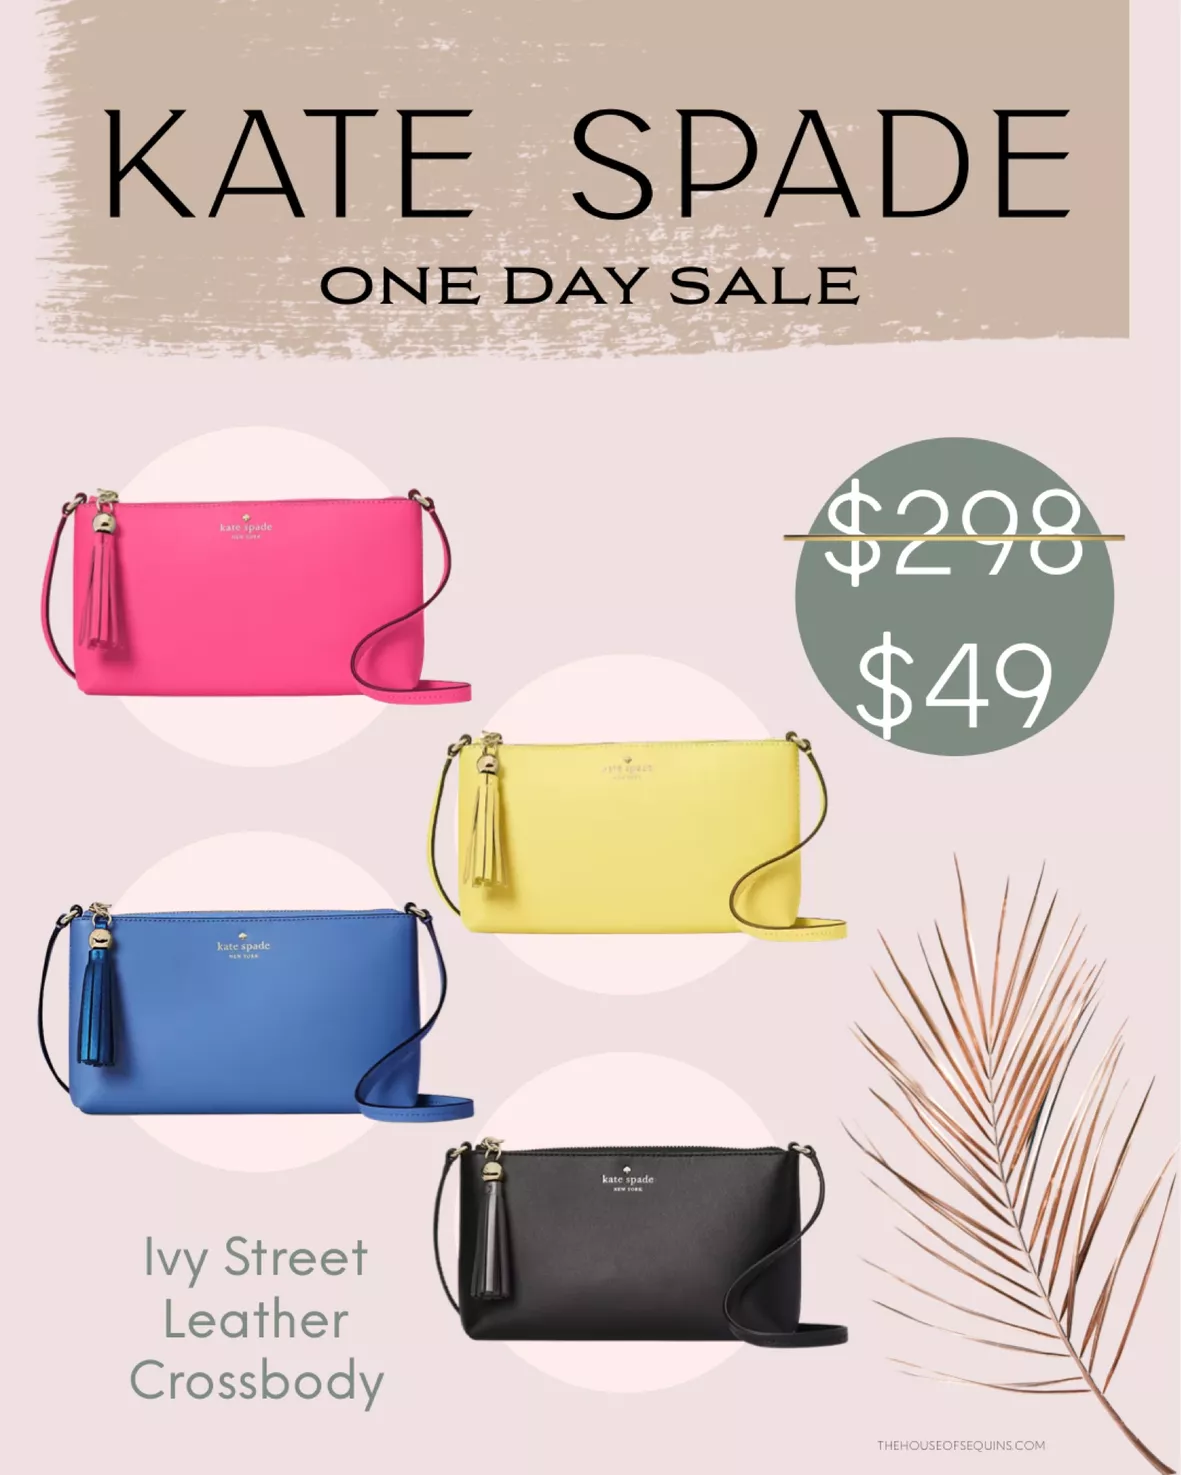 Kate Spade Ivy Street Leather Crossbody